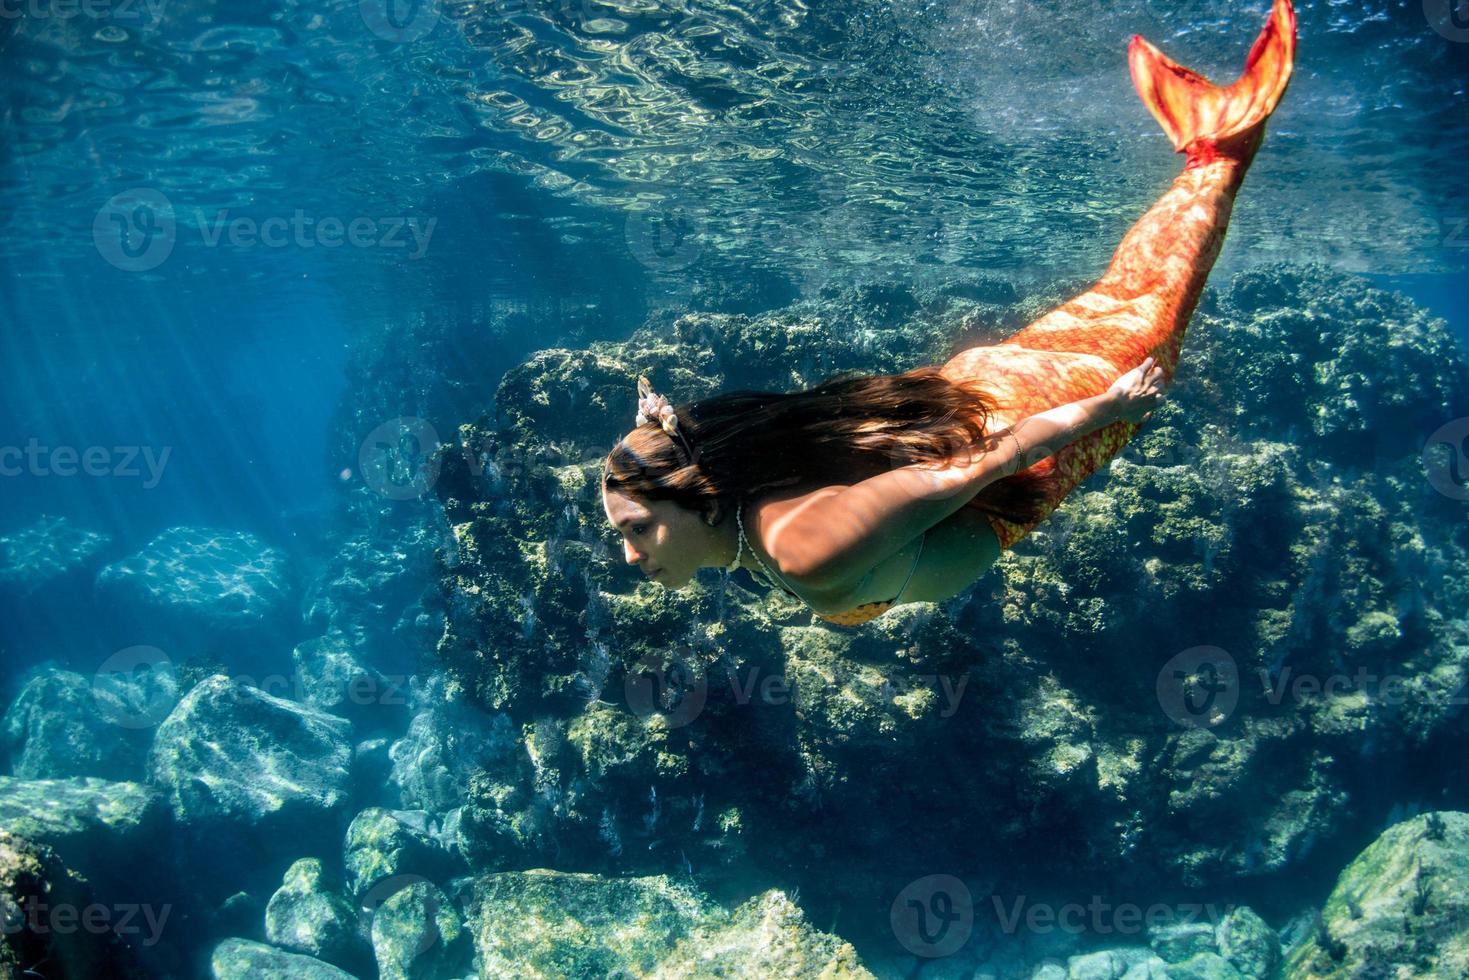 sjöjungfru simning under vattnet i de djup blå hav foto